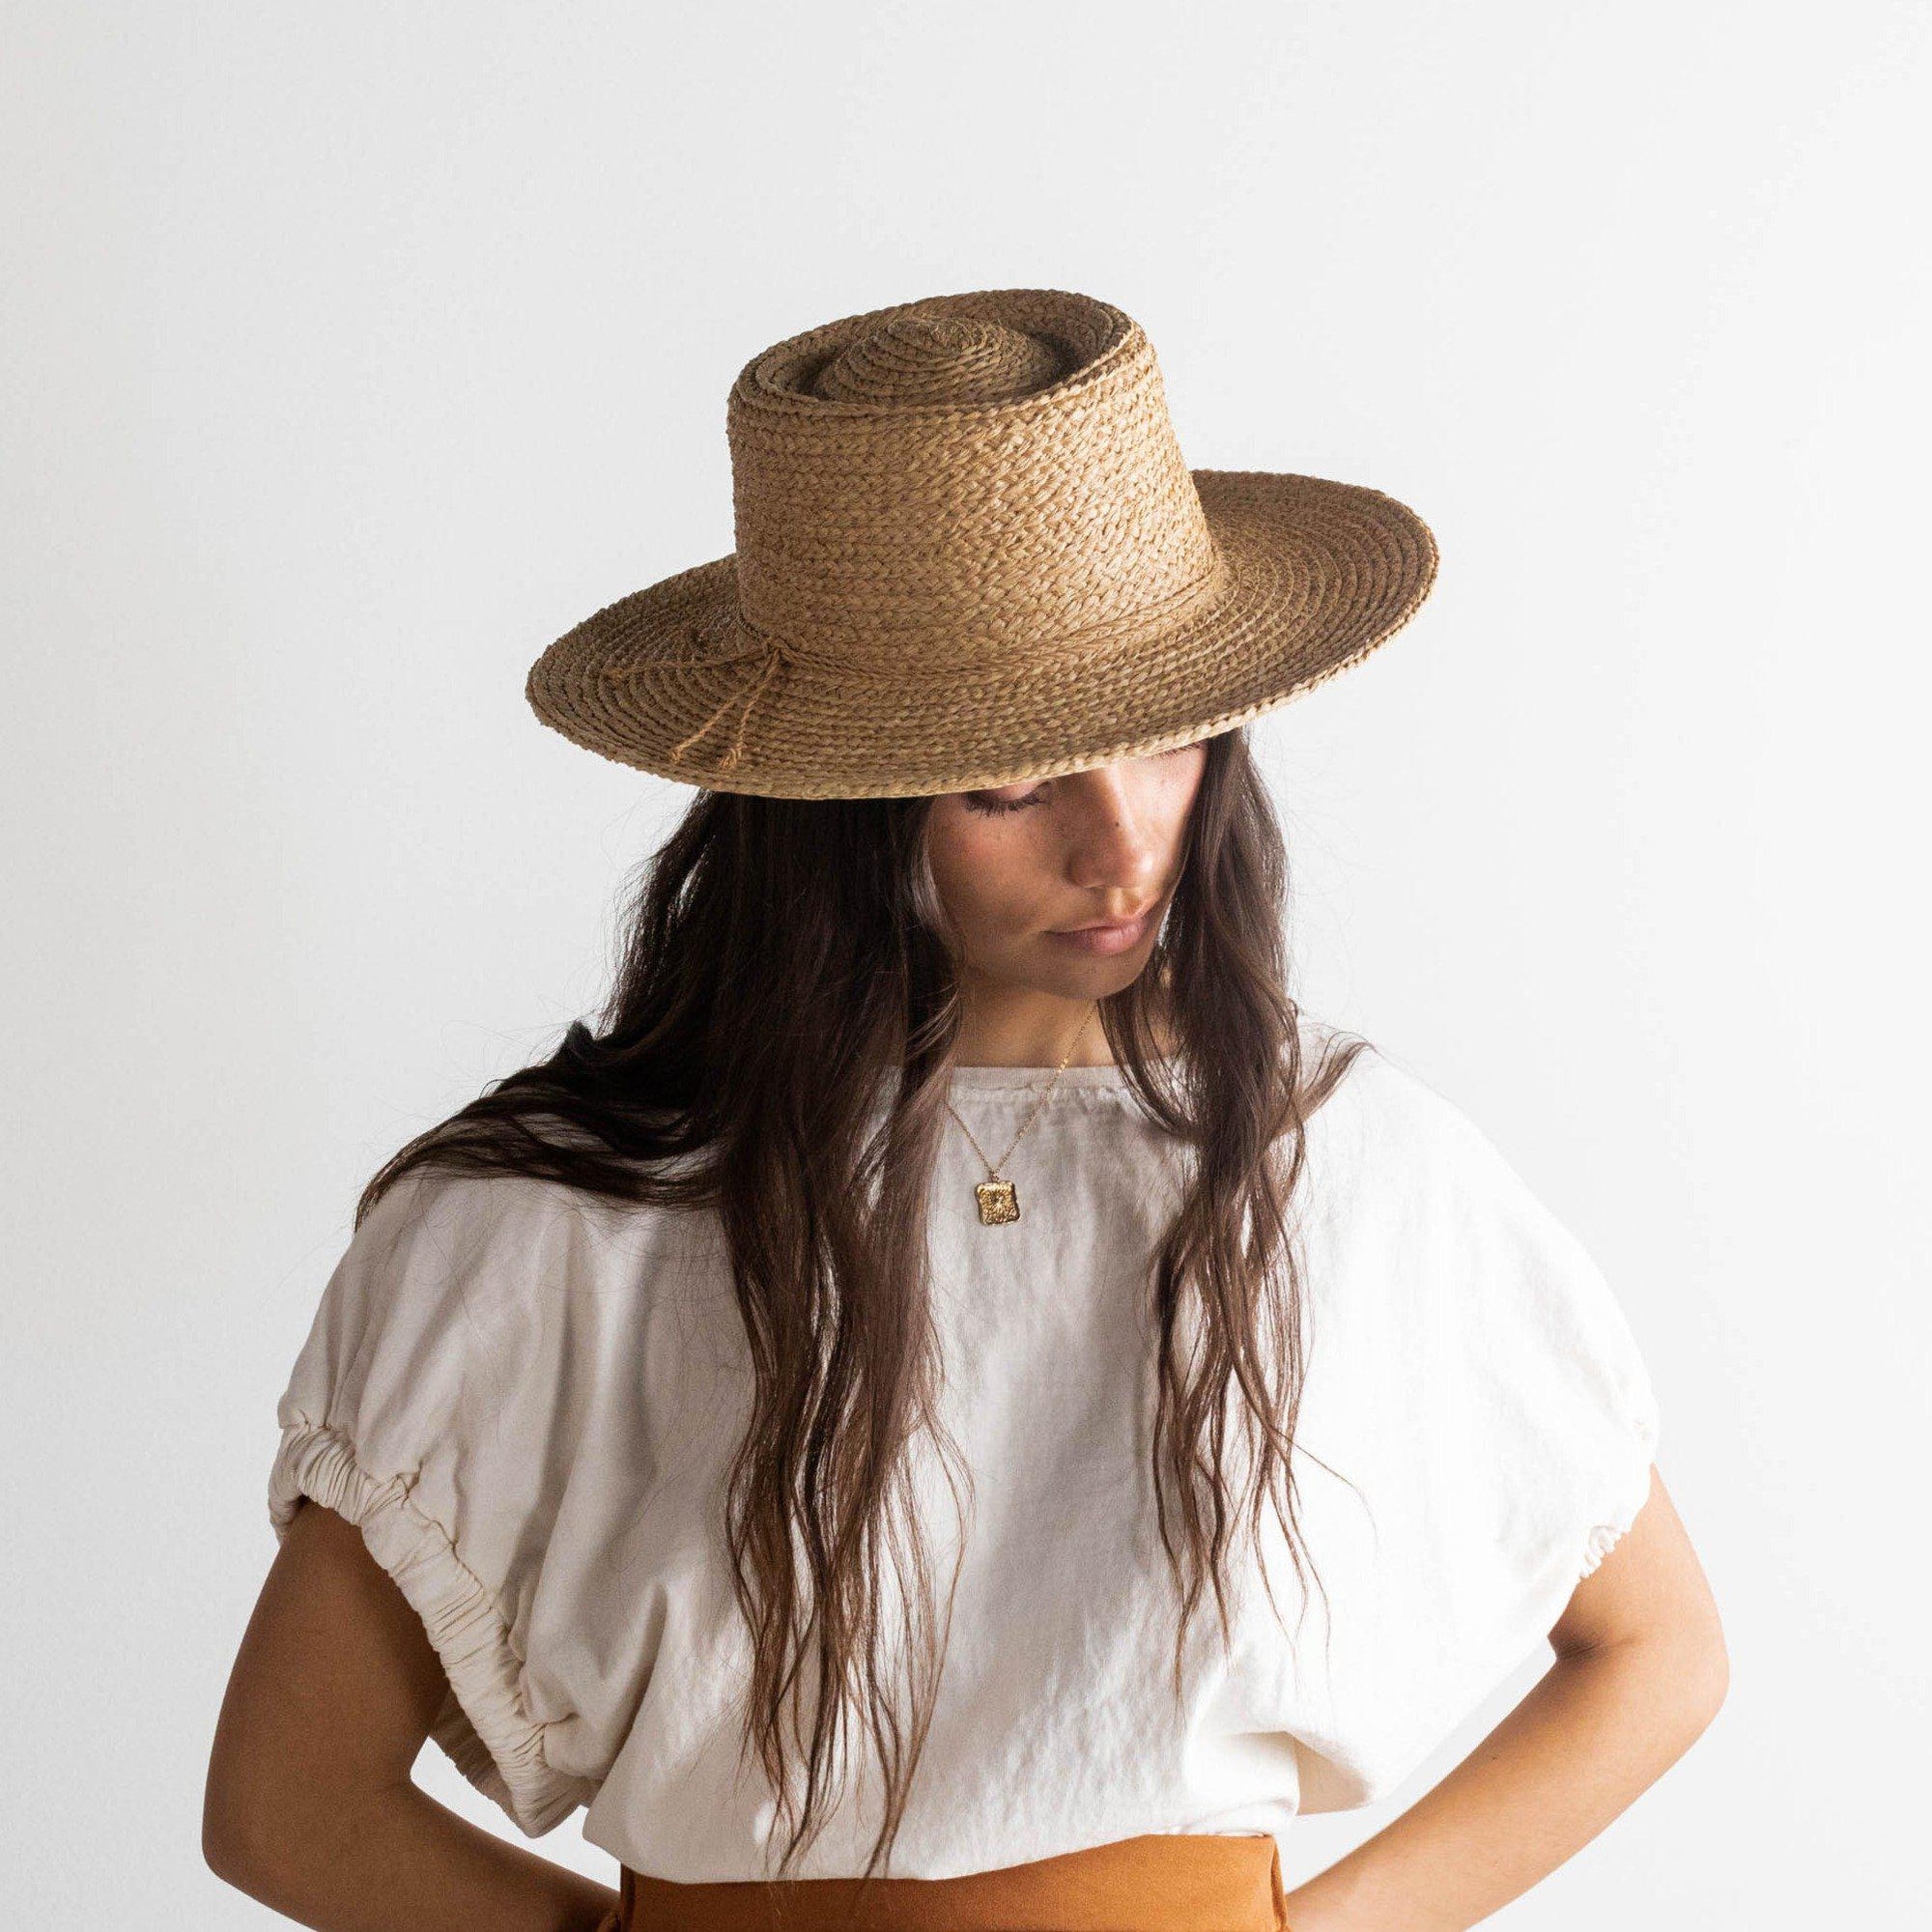 GIGI PIP Hats for Women- 2020 Sloan Straw Hat - Updated Style-Straw Hats